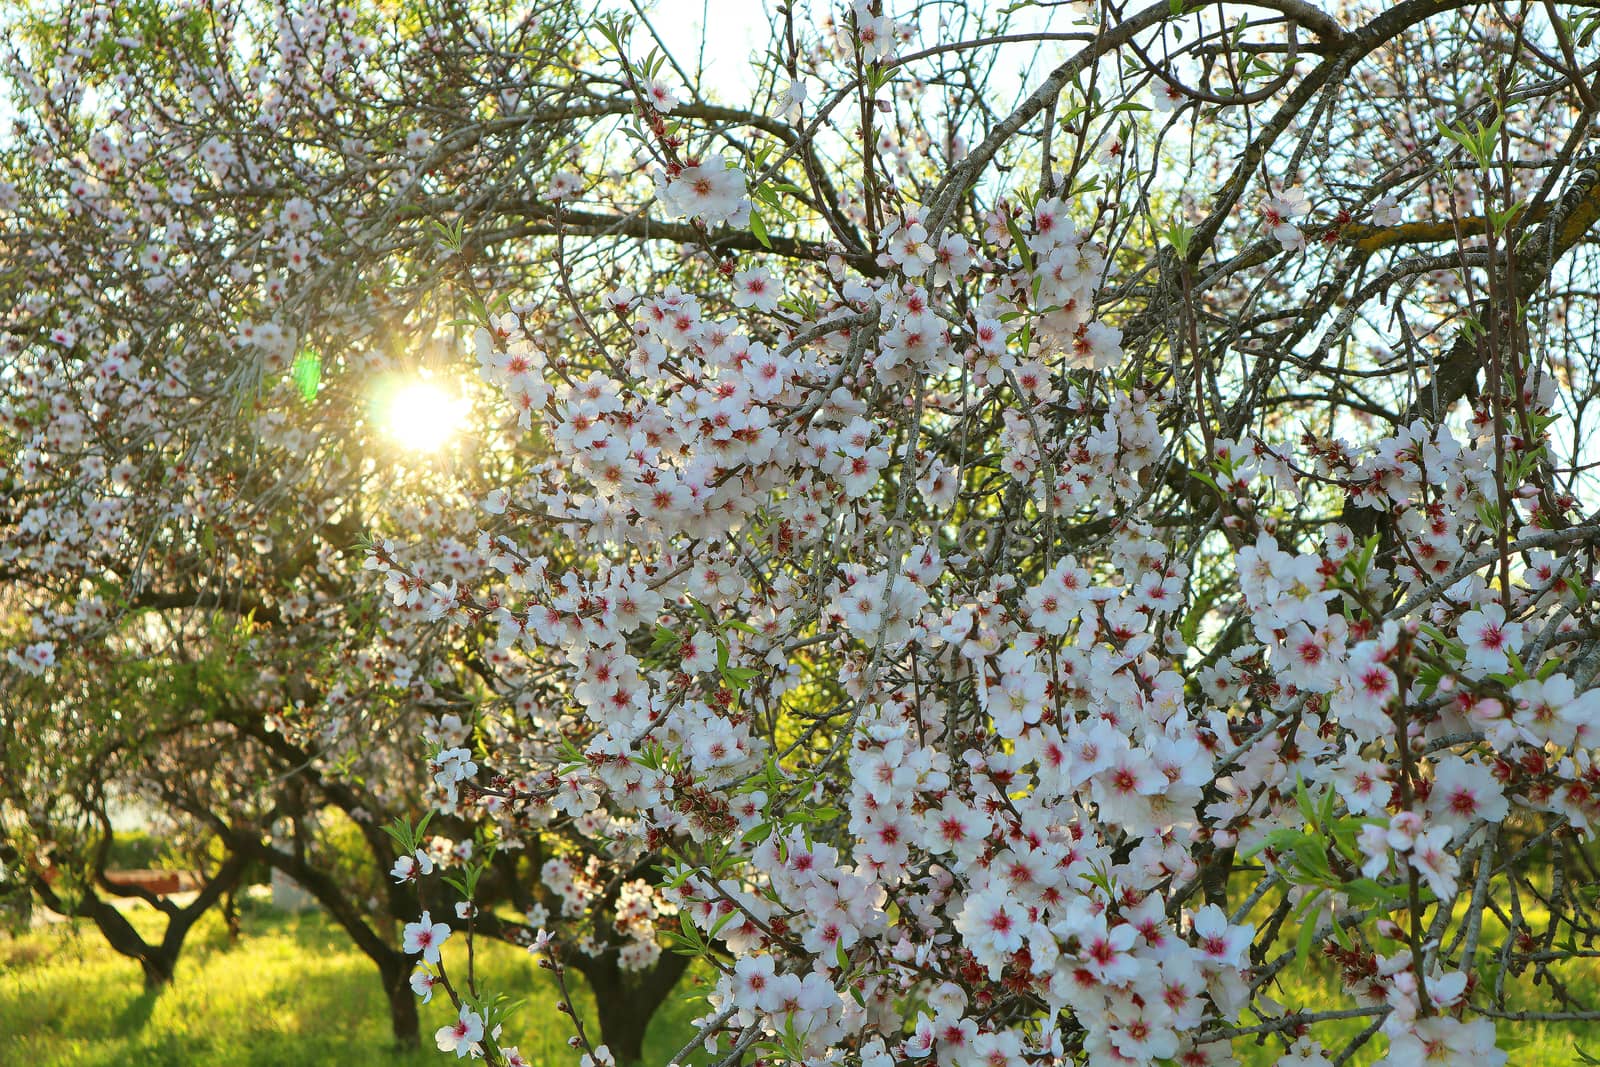 Almond trees in bloom, in Alicante Spain